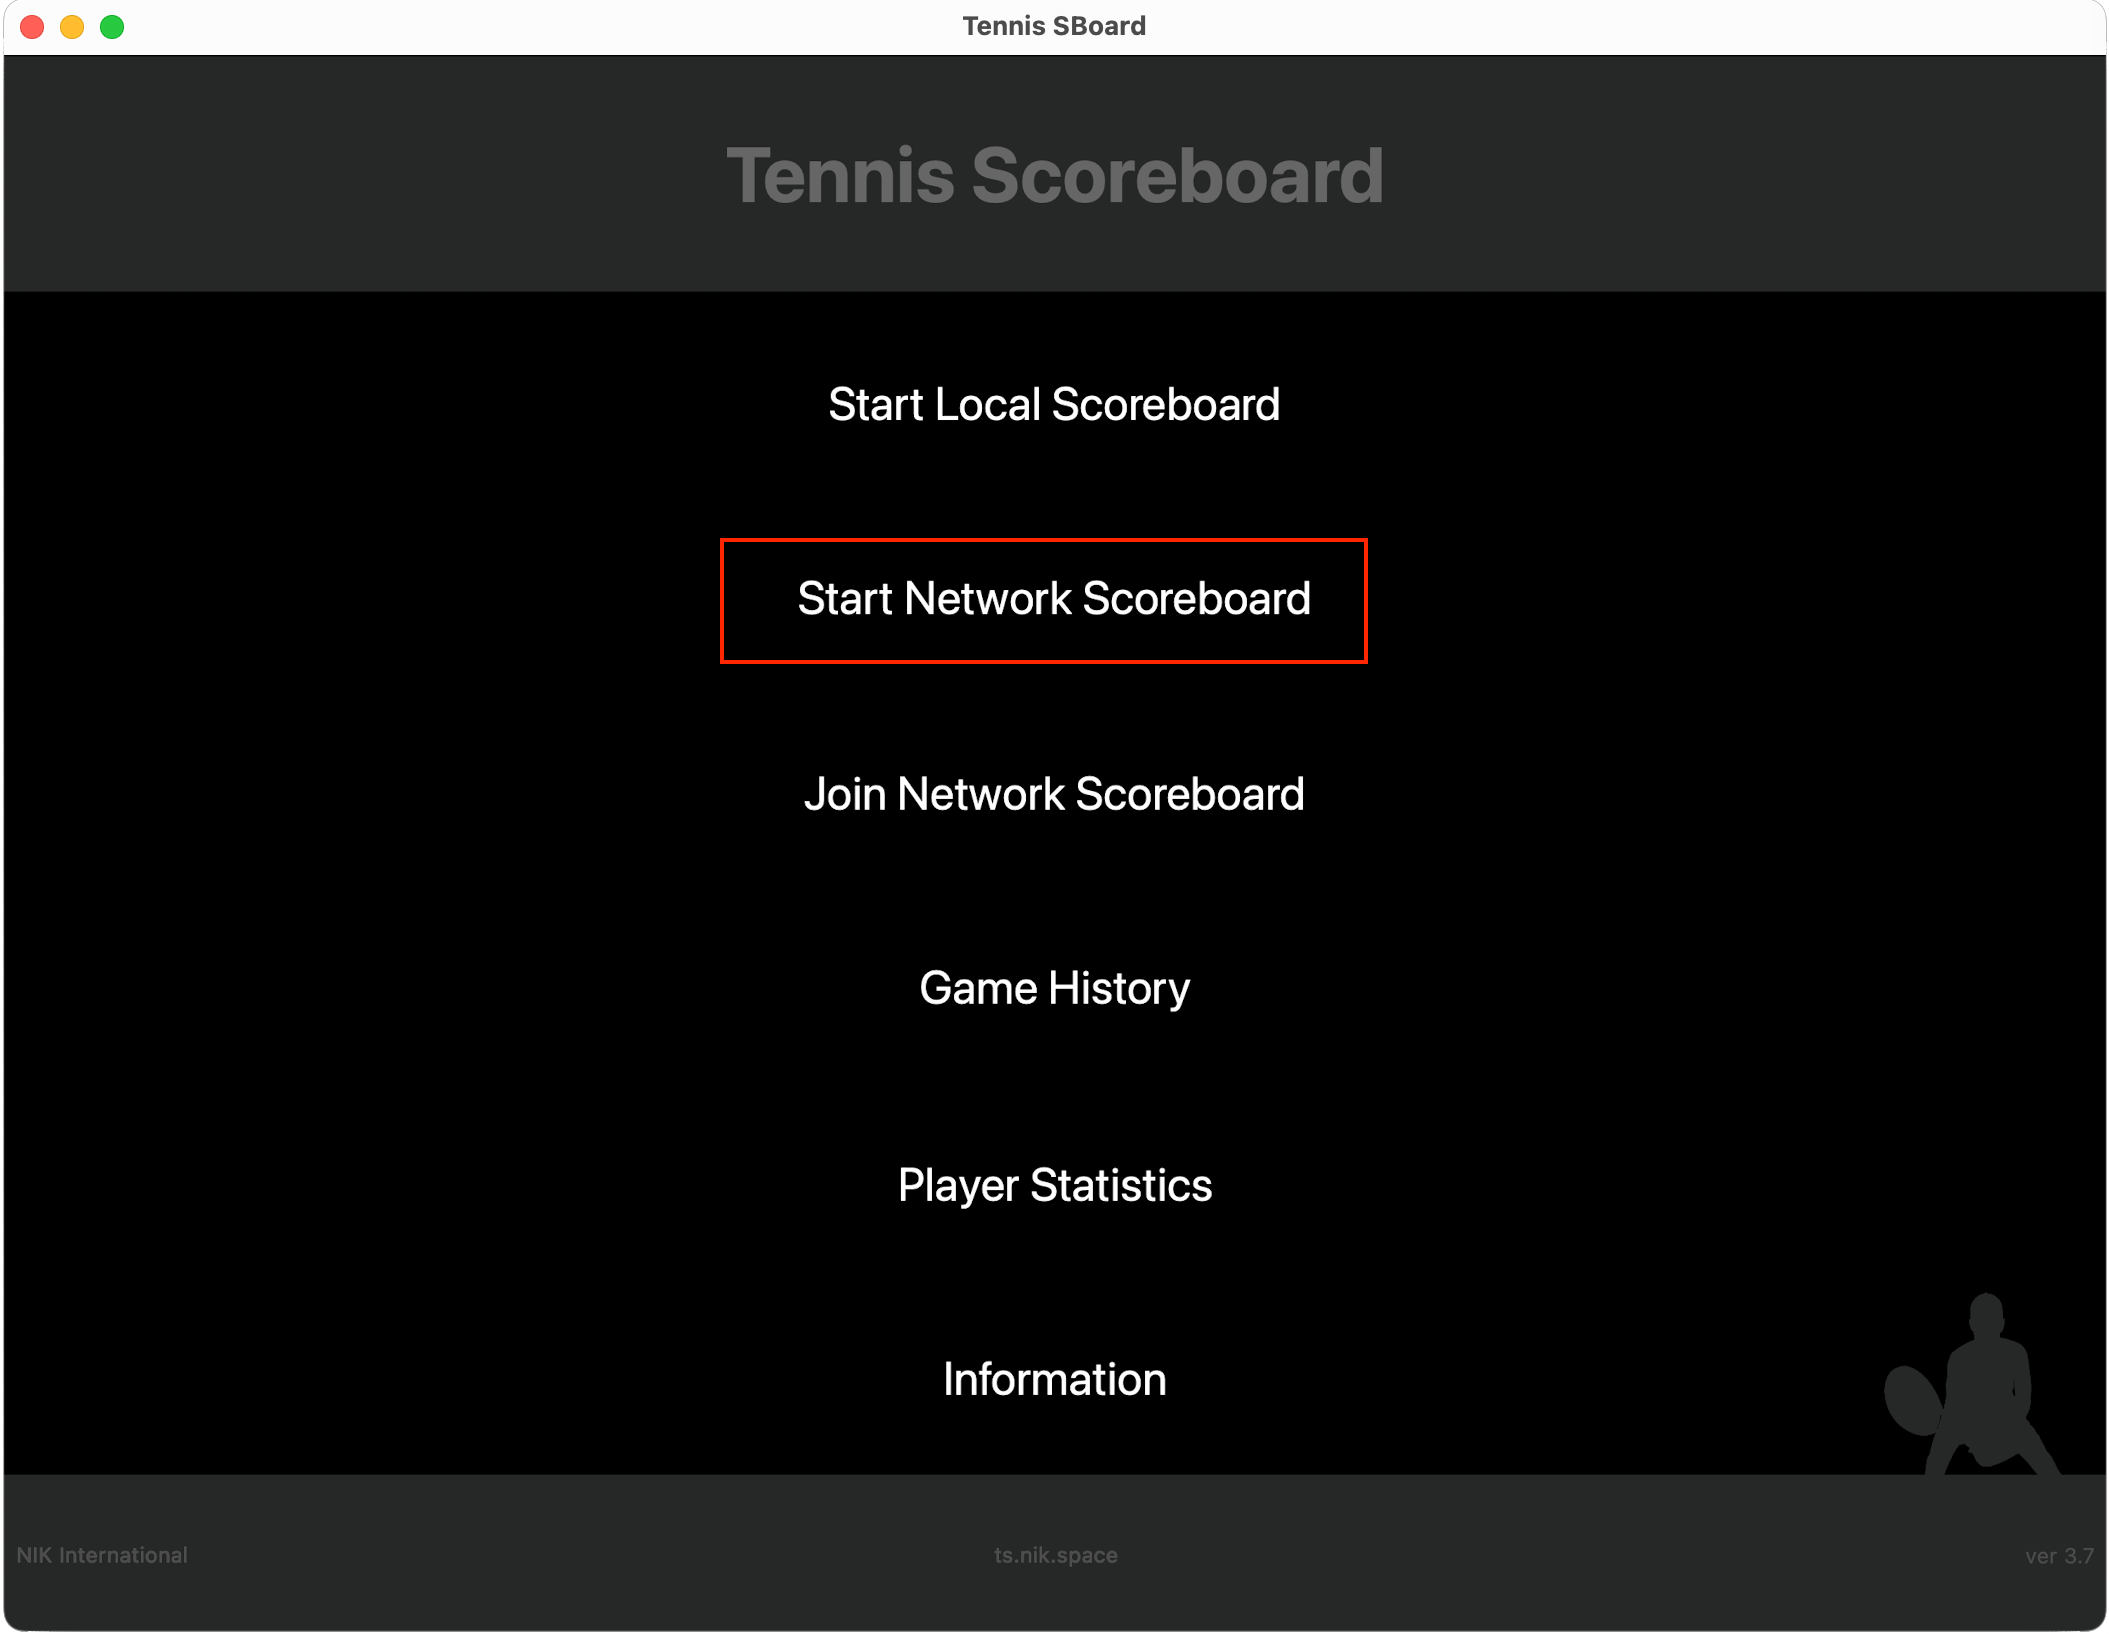 Select "Start Network Scoreboard"